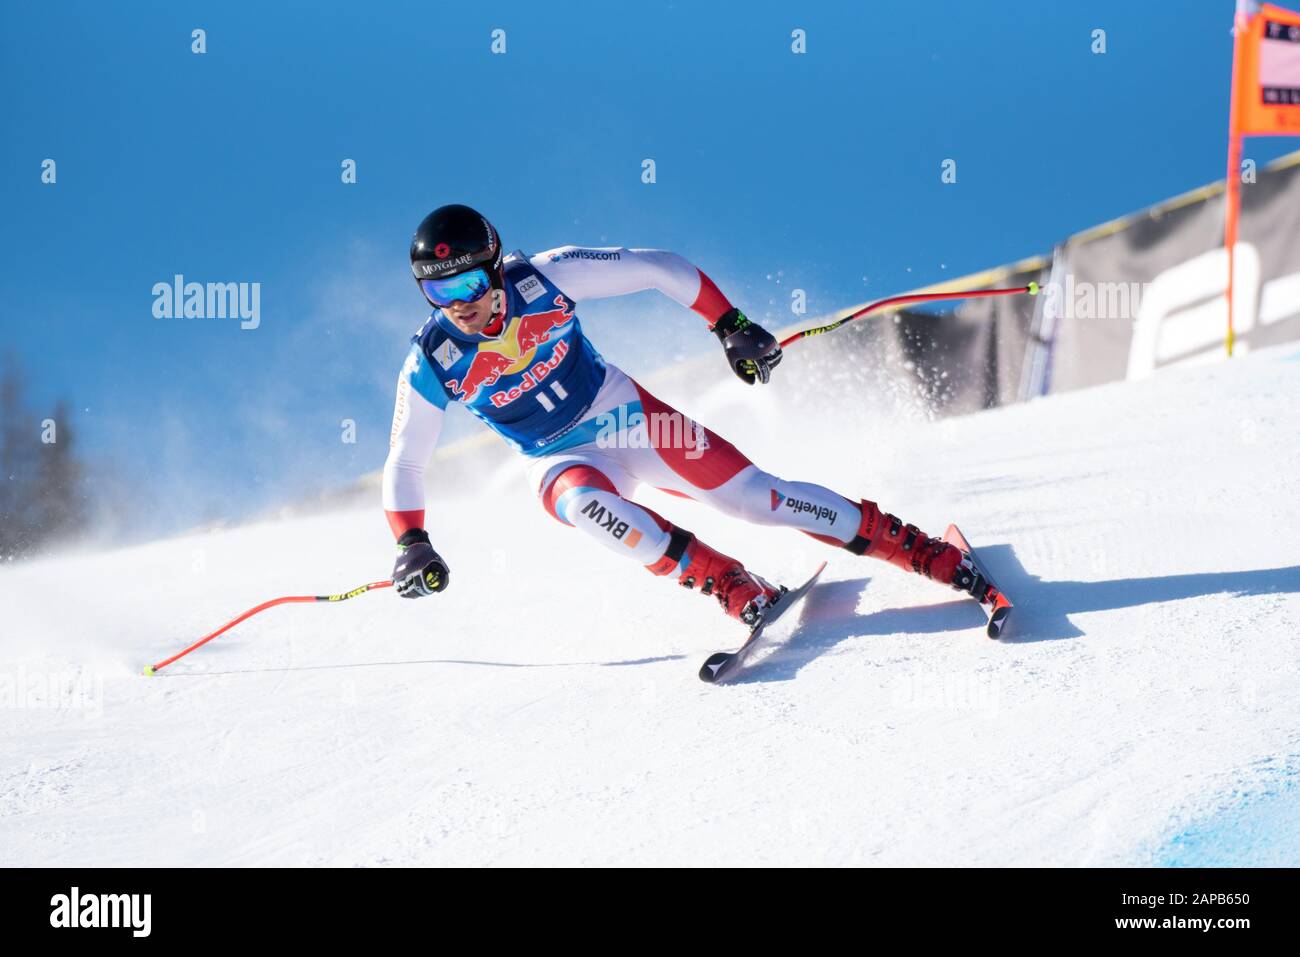 Mauro Caviezel of Switzerland at the Ski Alpin: 80. Hahnenkamm Race 2020 - Audi FIS Alpine Ski World Cup - Men's Downhill Training at the Streif on January 22, 2020 in Kitzbuehel, AUSTRIA. (Photo by Horst Ettensberger/ESPA-Images) Stock Photo